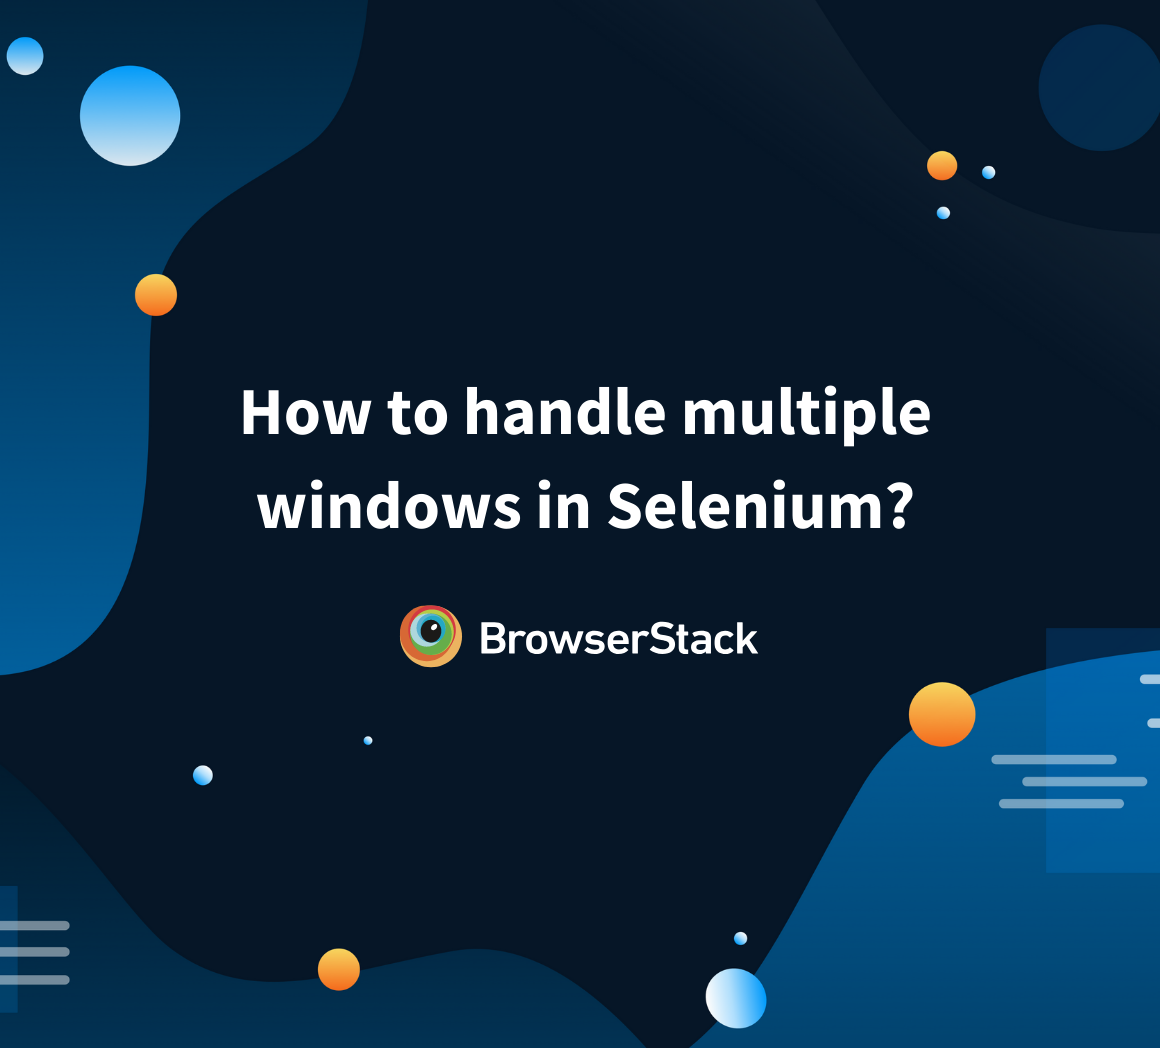 Handling multiple windows in Selenium